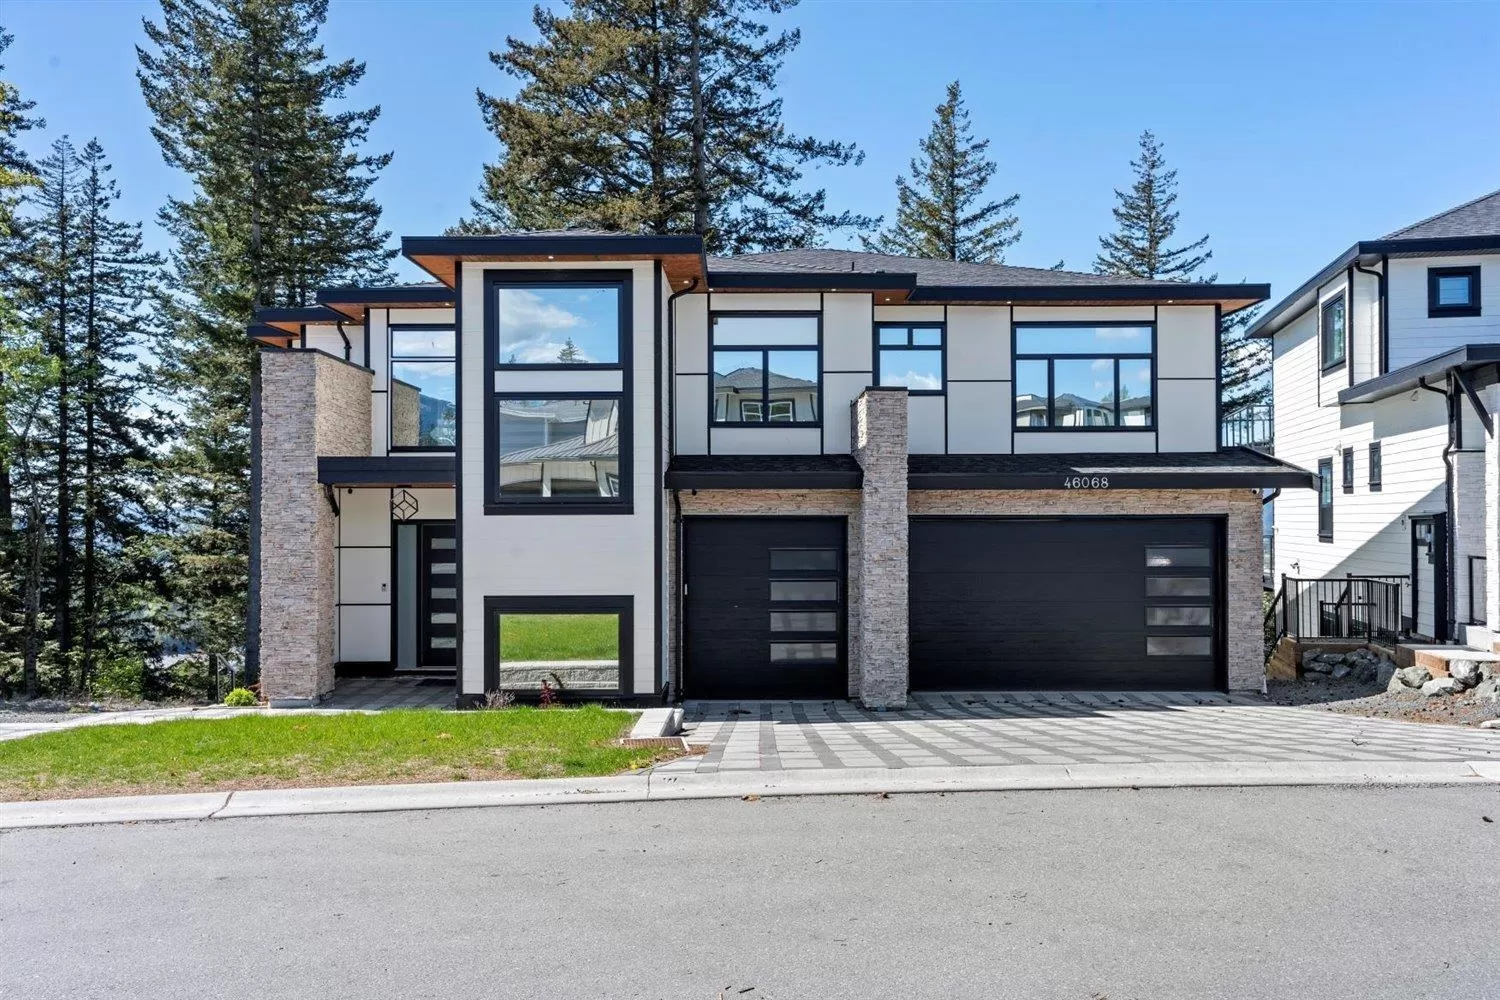 House for rent: 46068 Crestview Drive, Chilliwack, British Columbia V2R 6G4